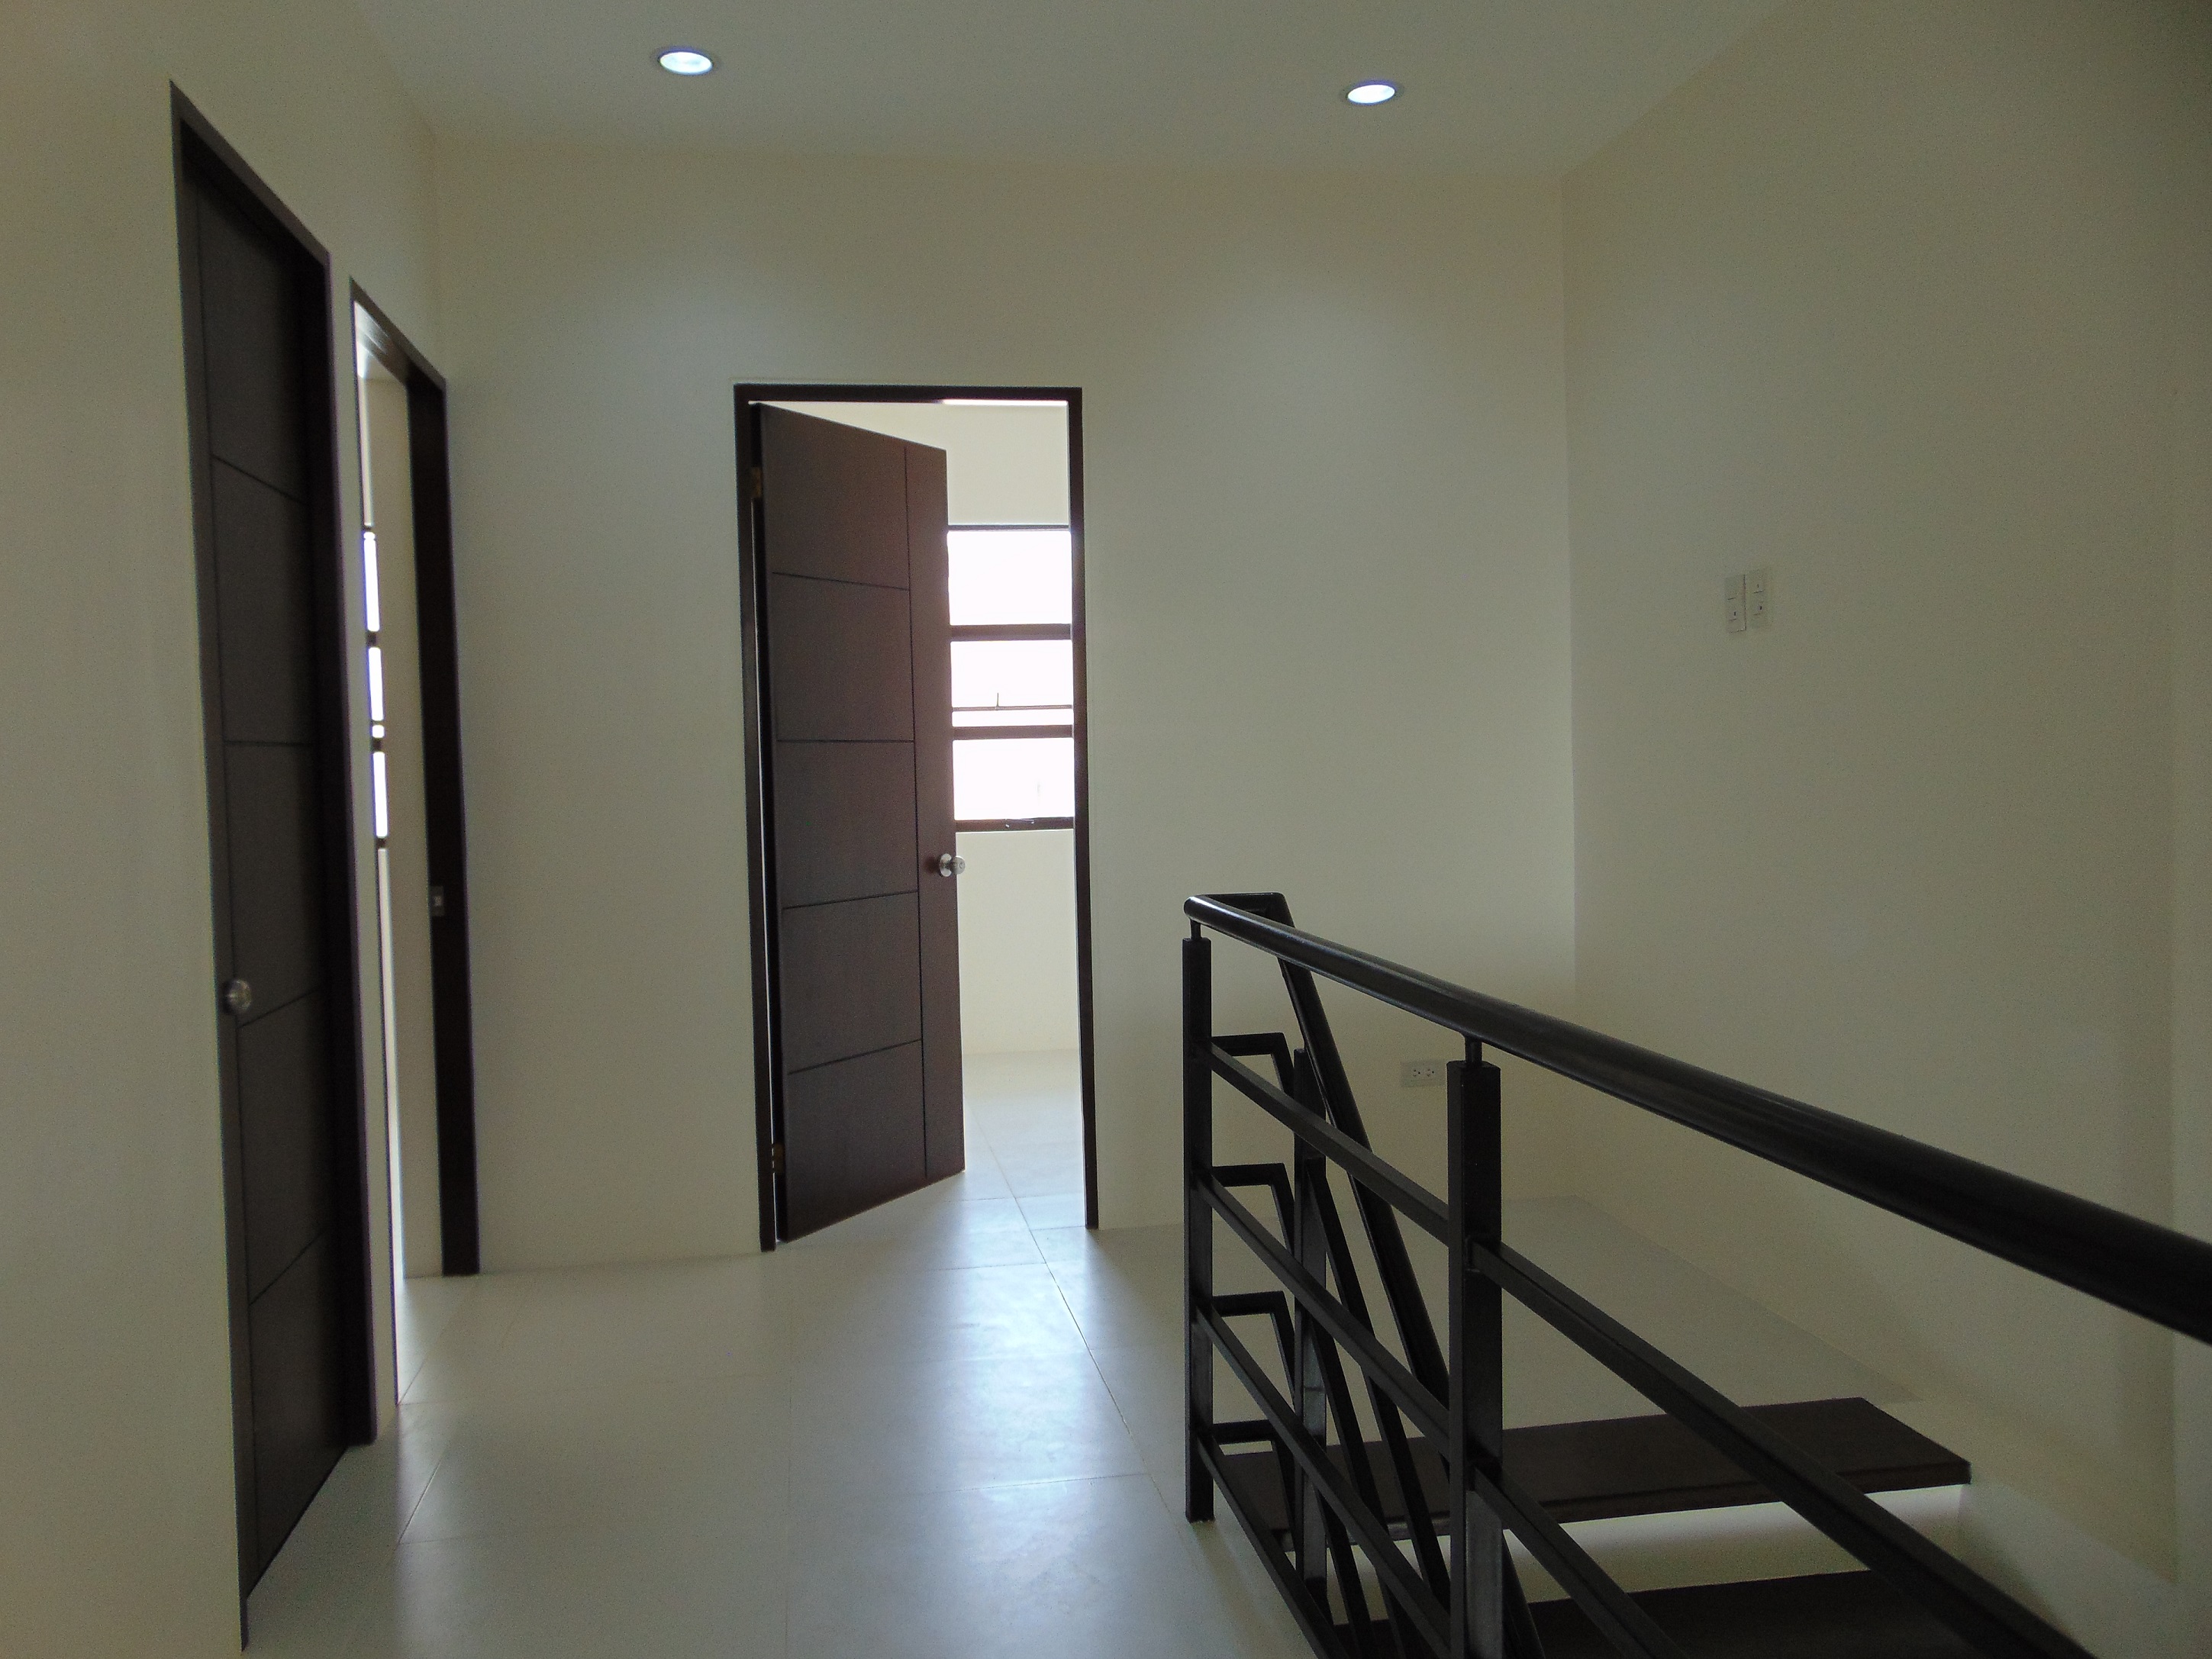 4-bedrooms-townhouse-located-in-lawaan-talisay-city-cebu